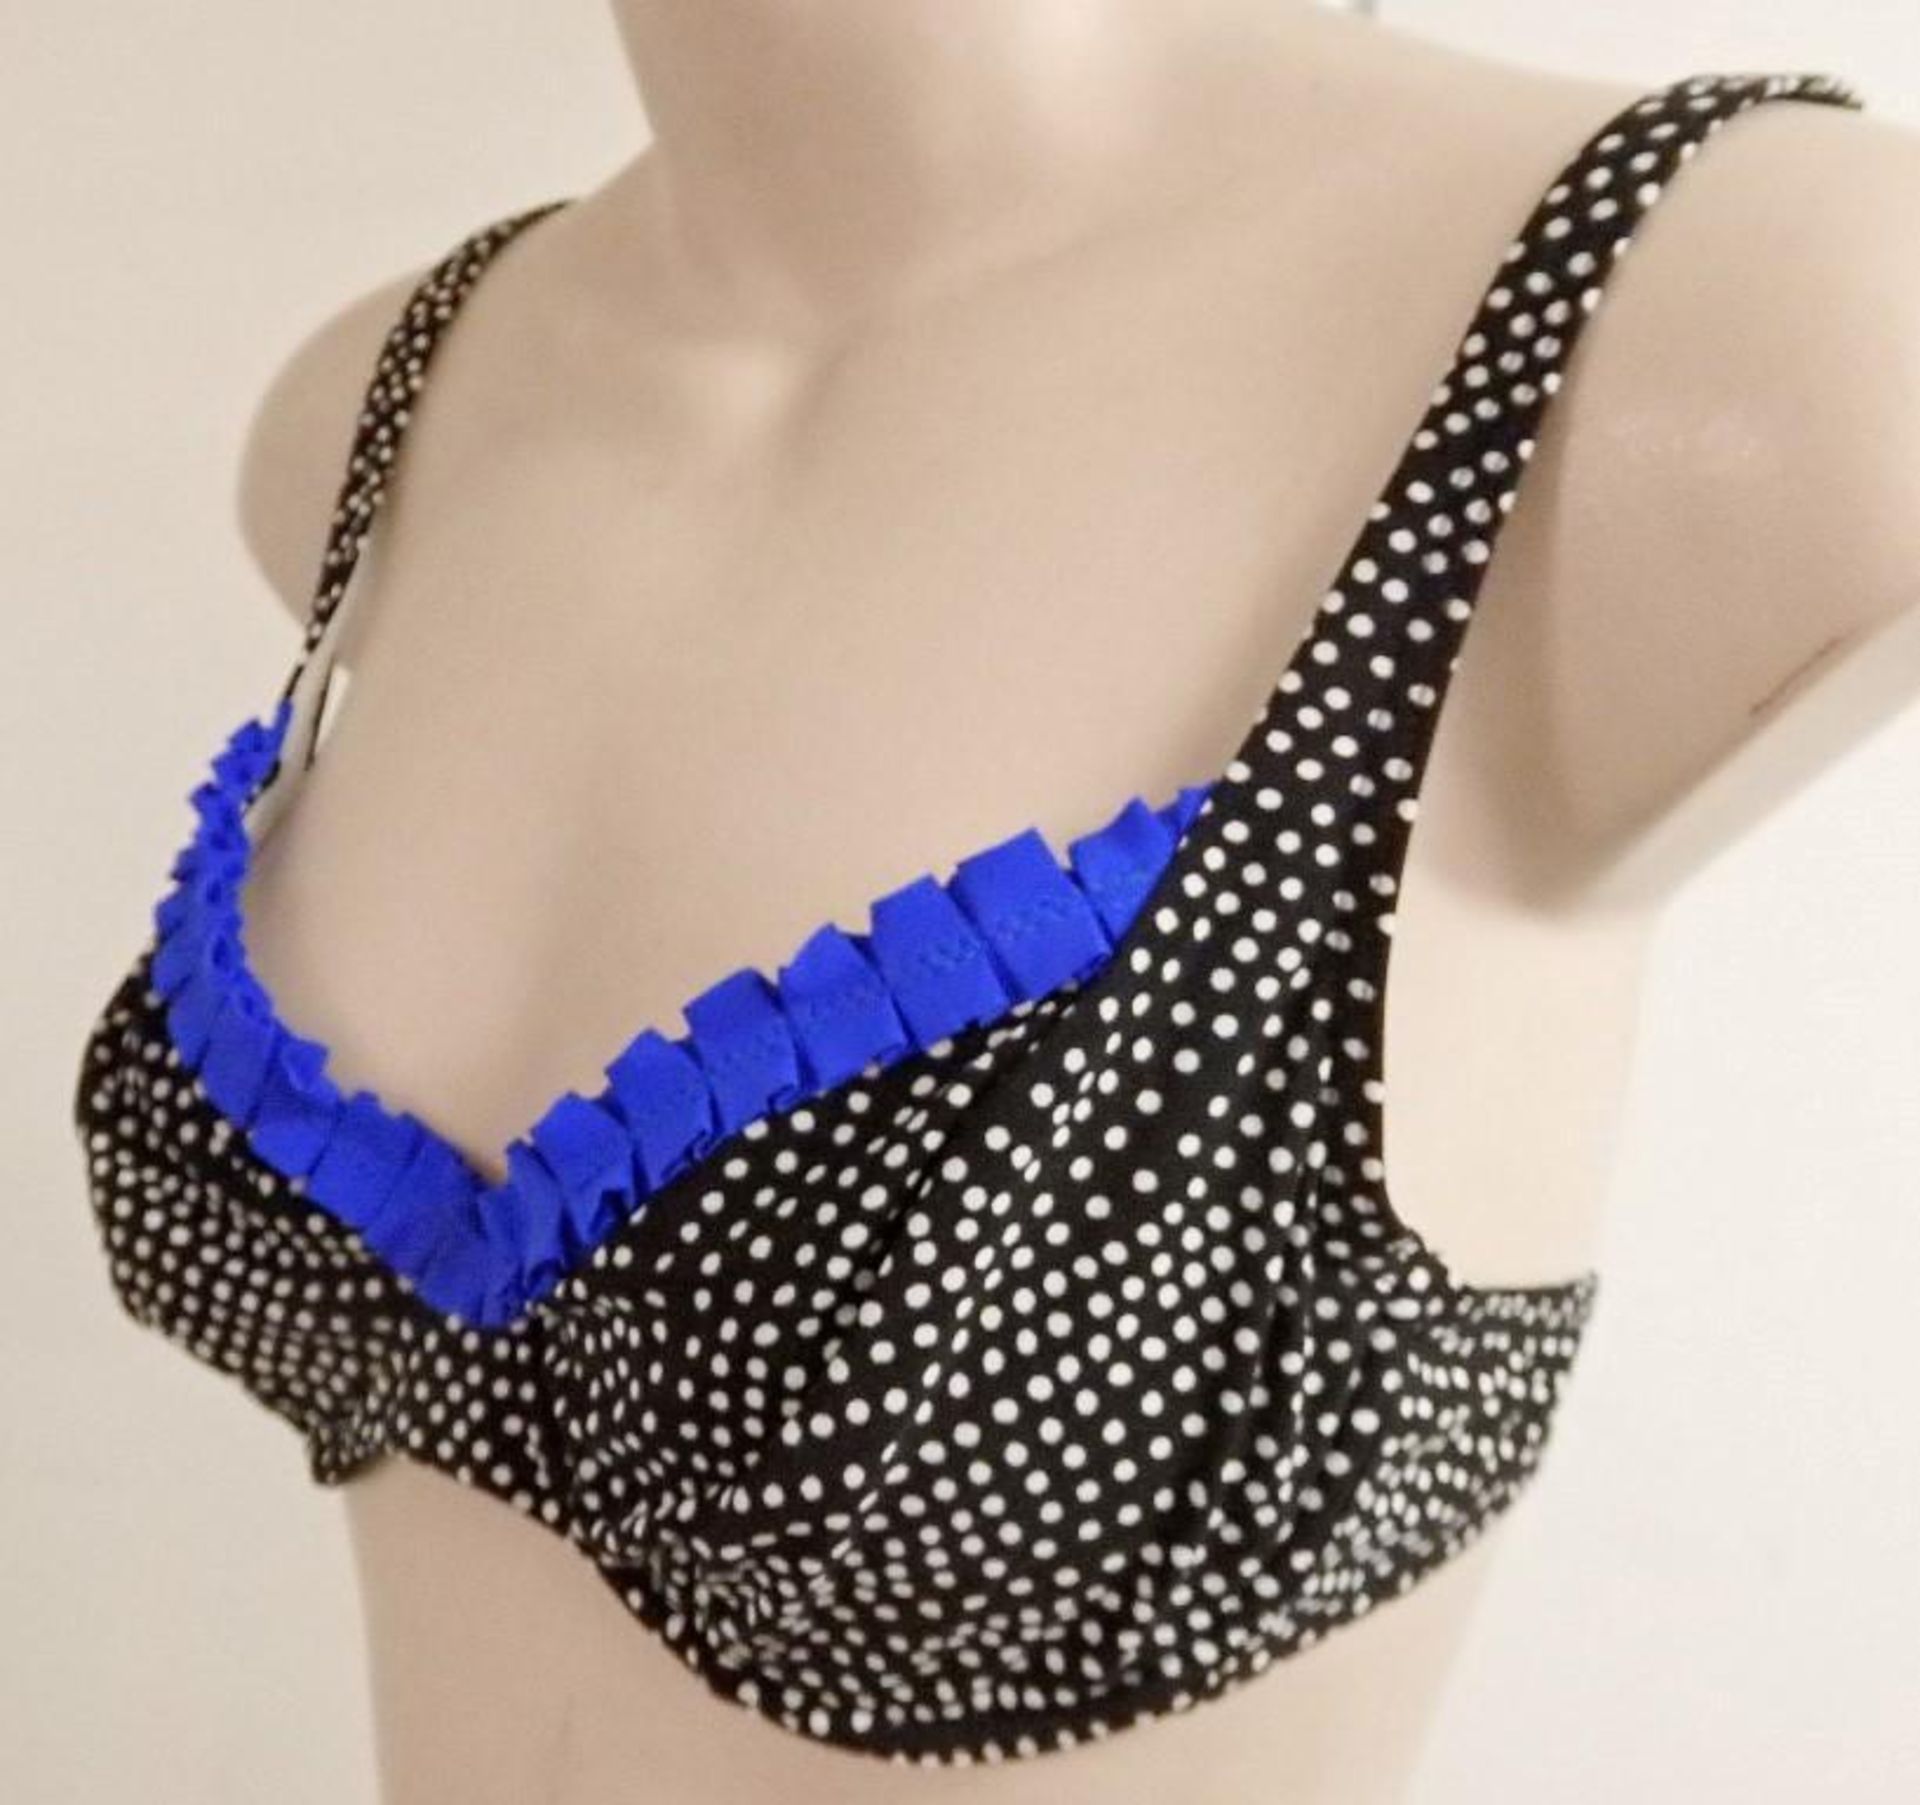 1 x Rasurel - Black Polka dot with royal blue trim &frill Tobago Bikini - B21068 - Size 2C - UK 32 - - Image 10 of 10